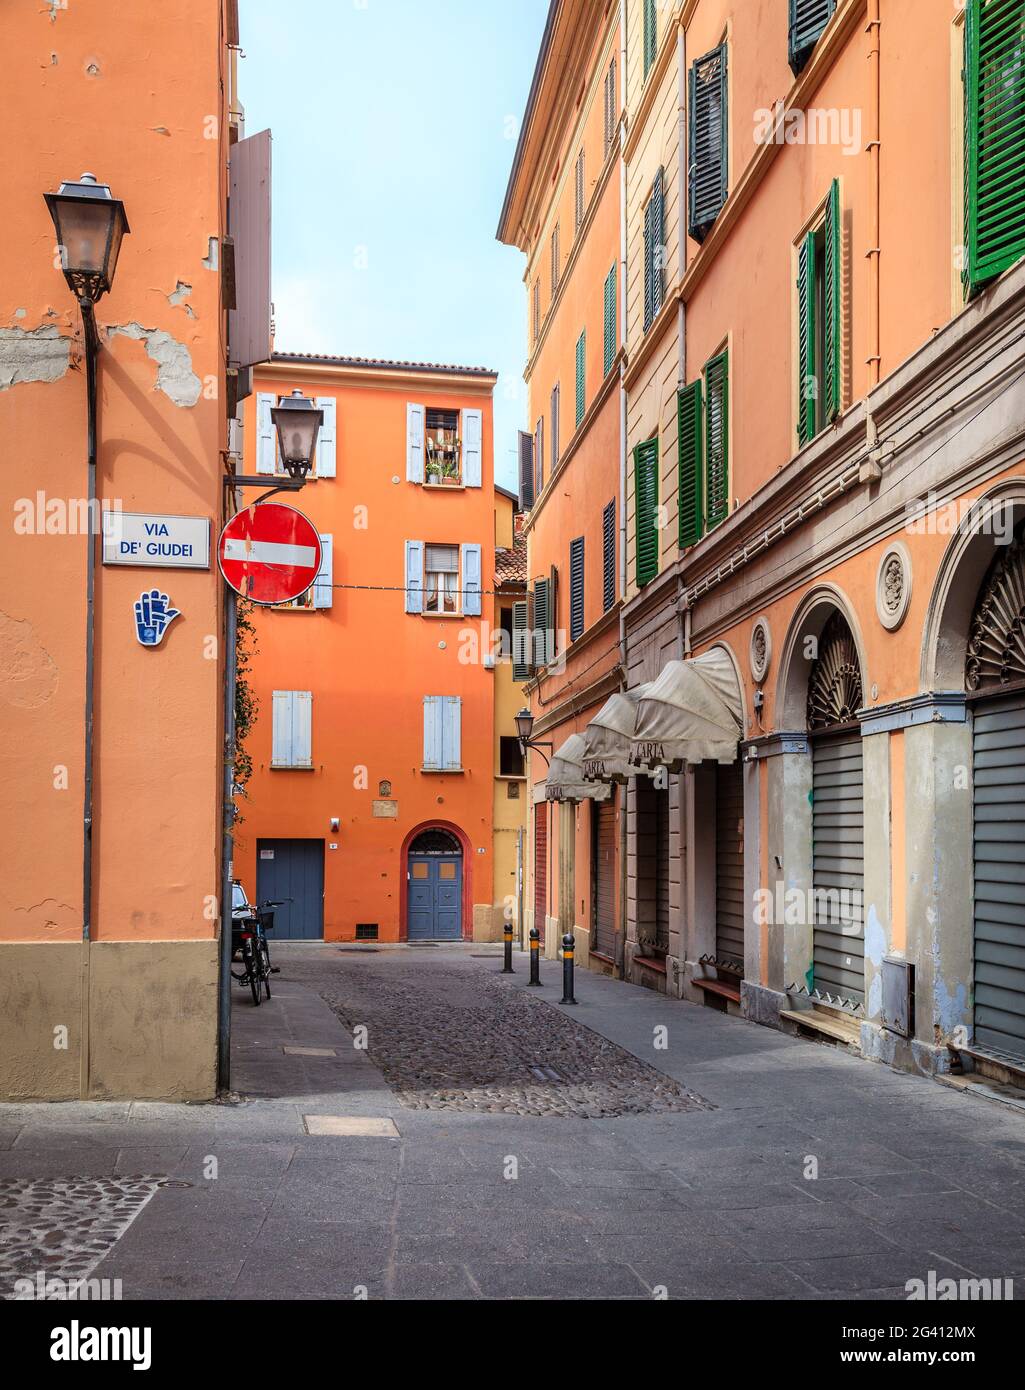 A street in historic Jewish Ghetto in Bologna, Italy Stock Photo - Alamy